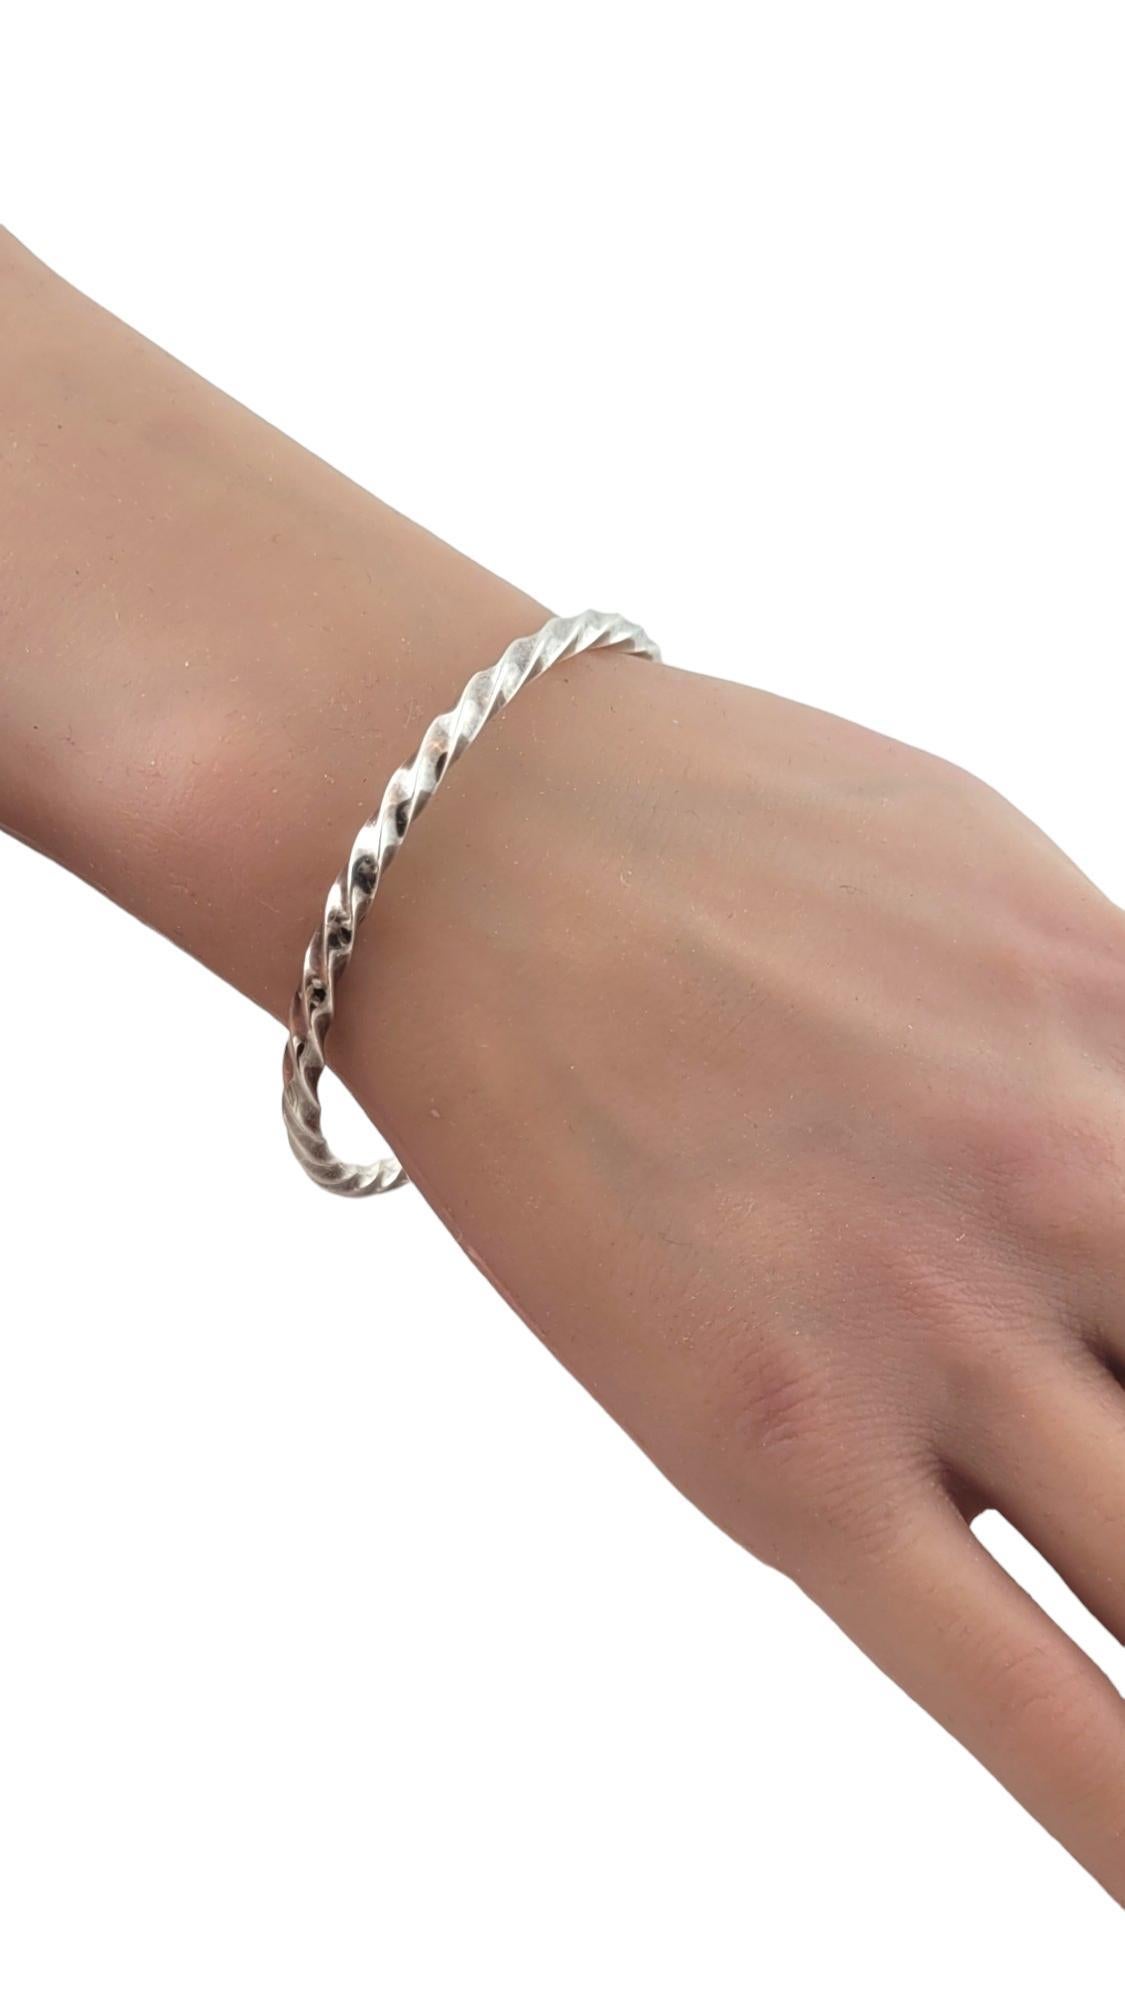 Tiffany & Co. Sterling Silver Twist Bangle Bracelet #17394 For Sale 2